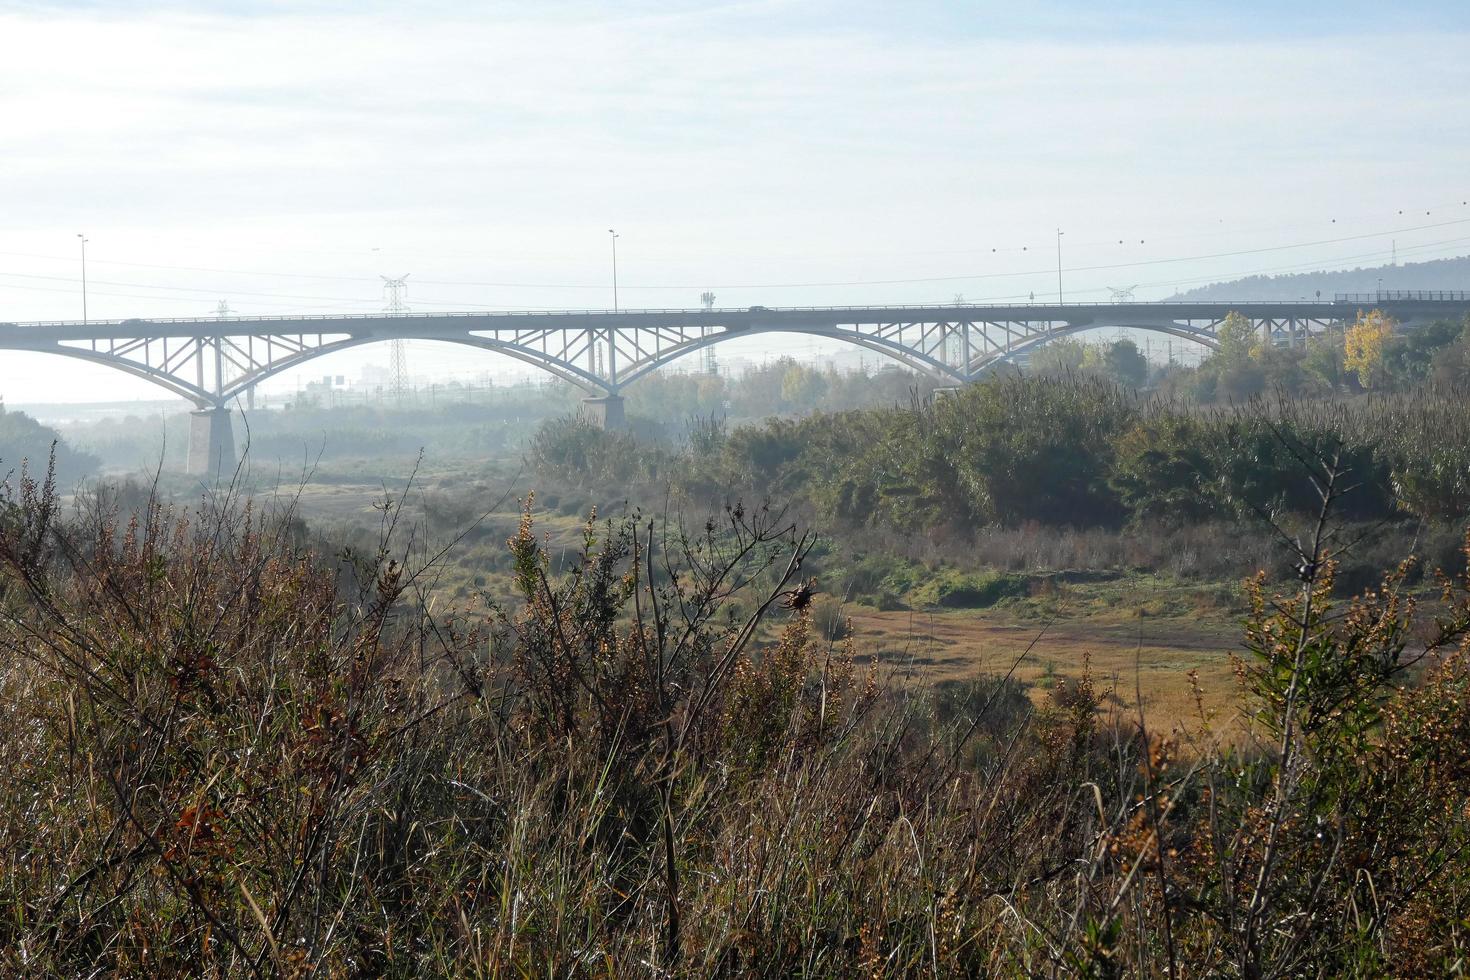 Modern bridge spanning a river, an engineering feat photo